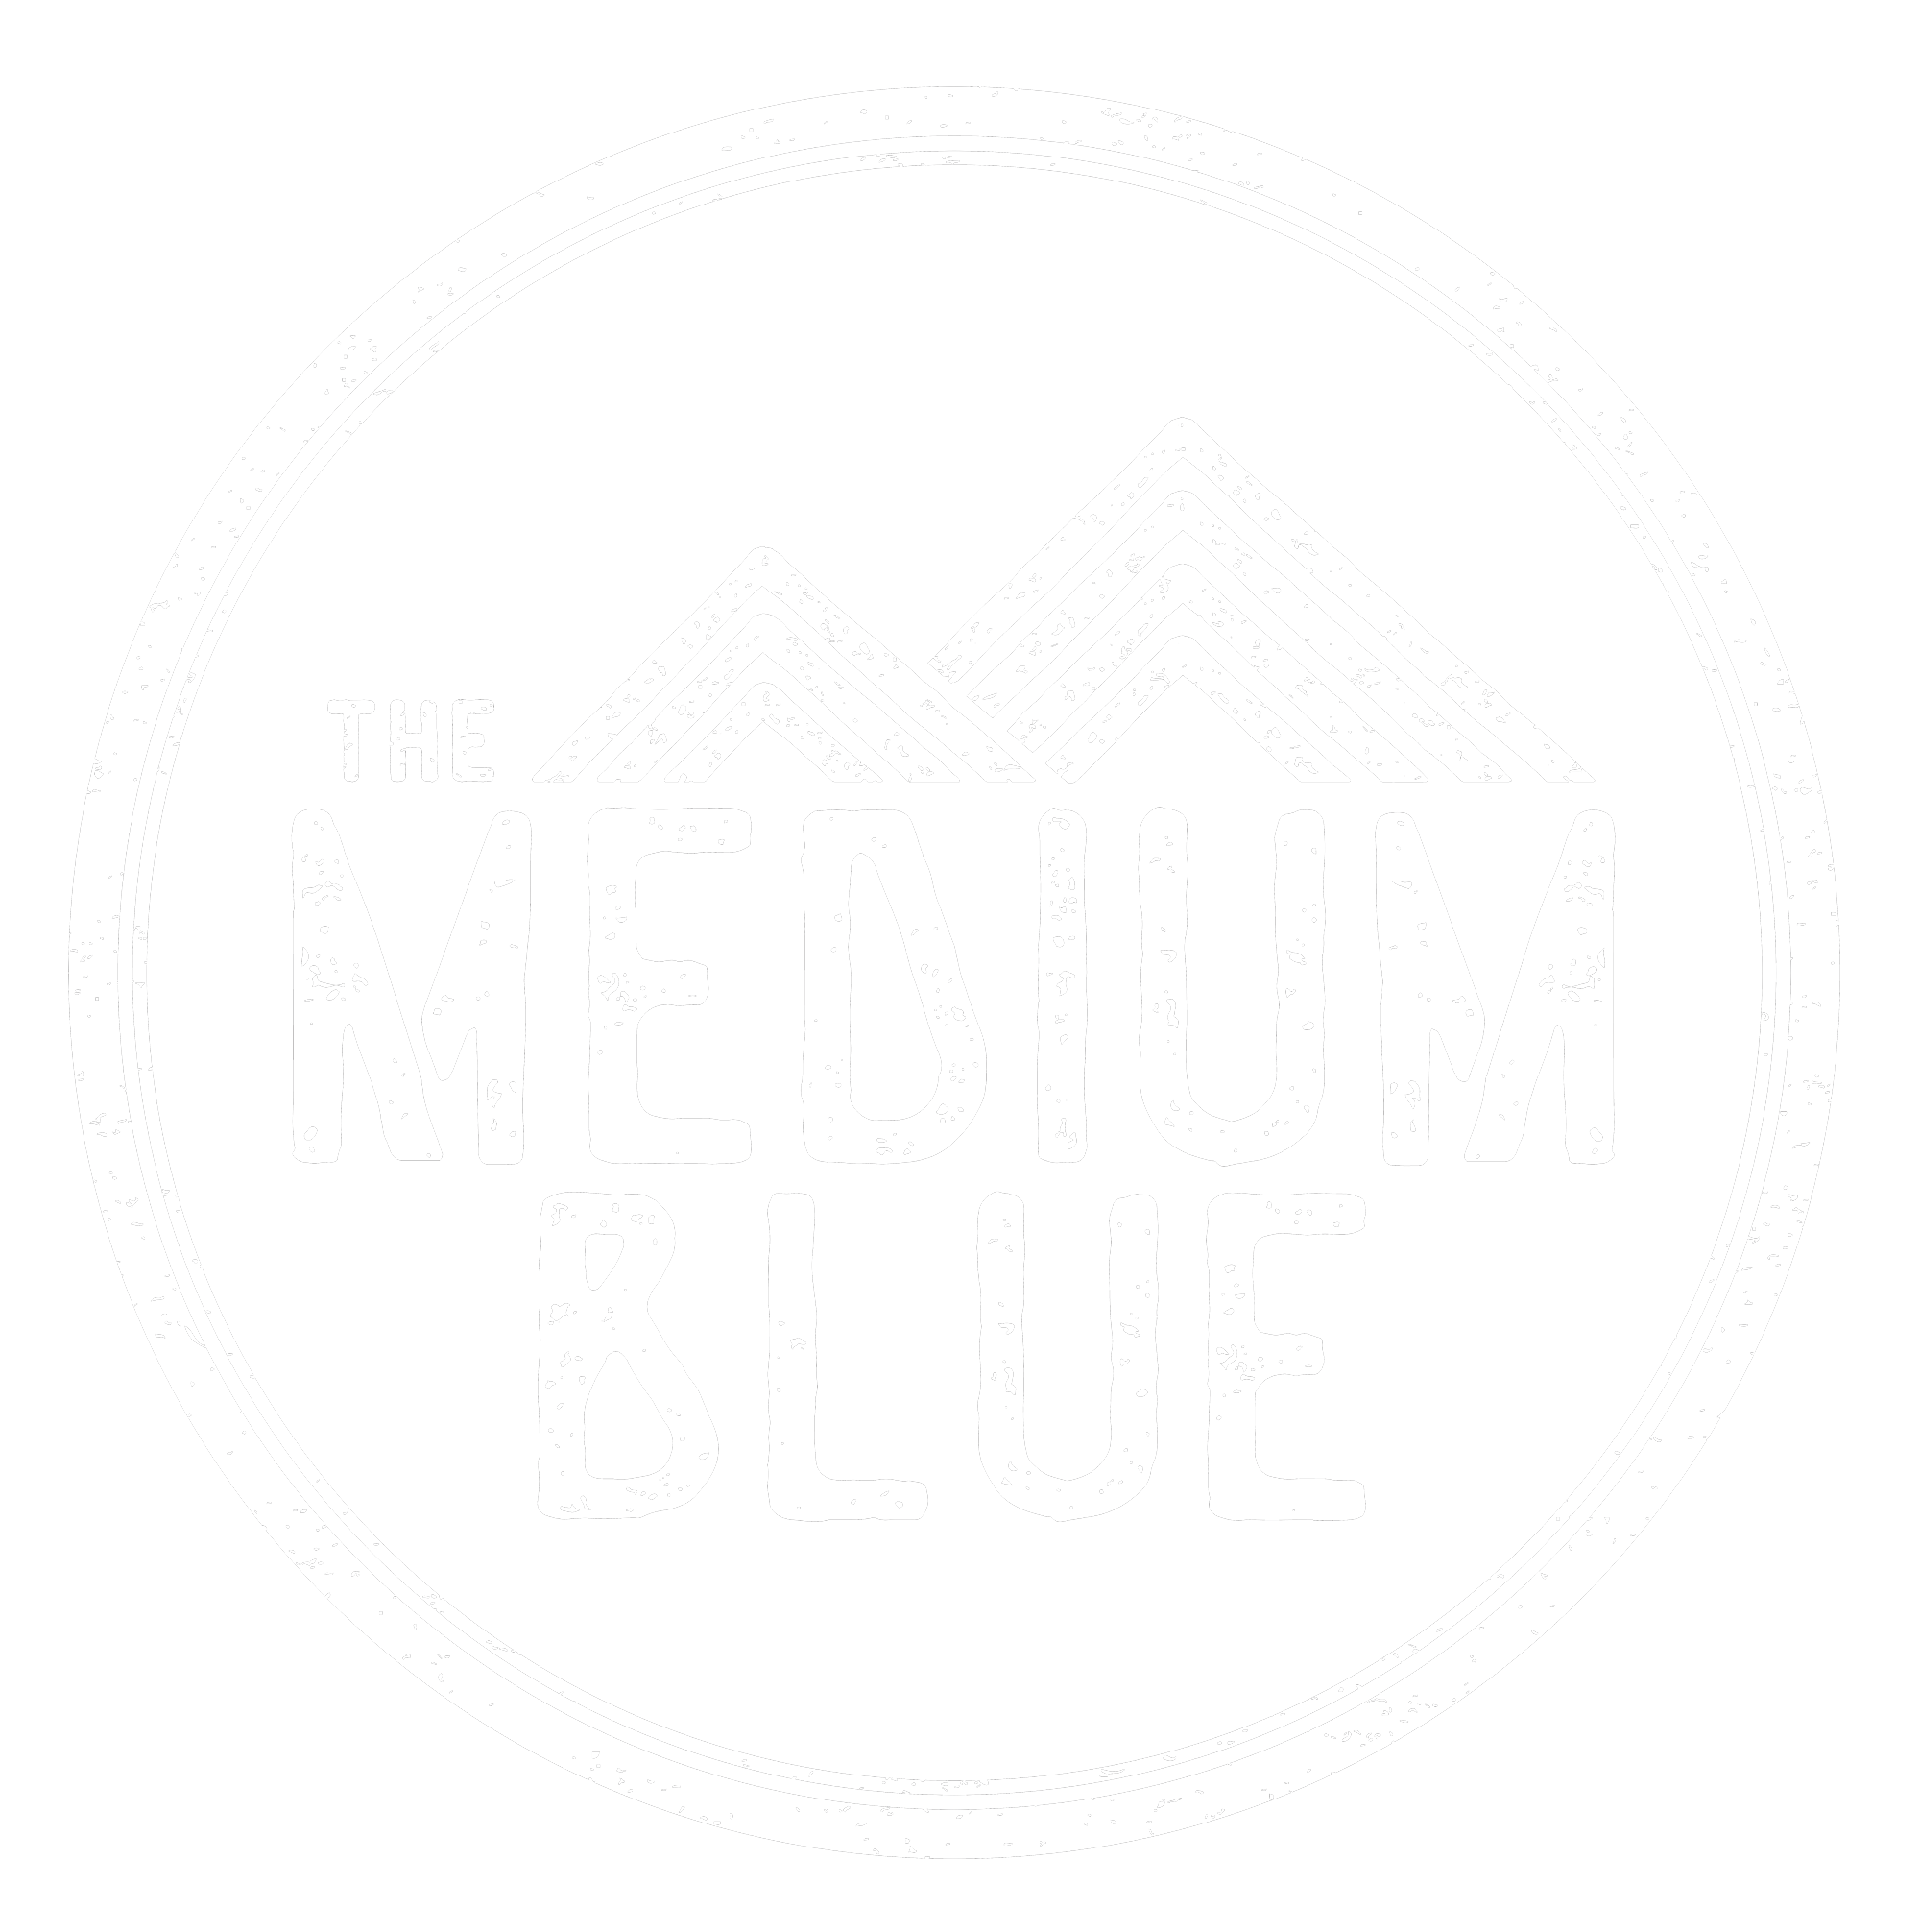 THE MEDIUM BLUE